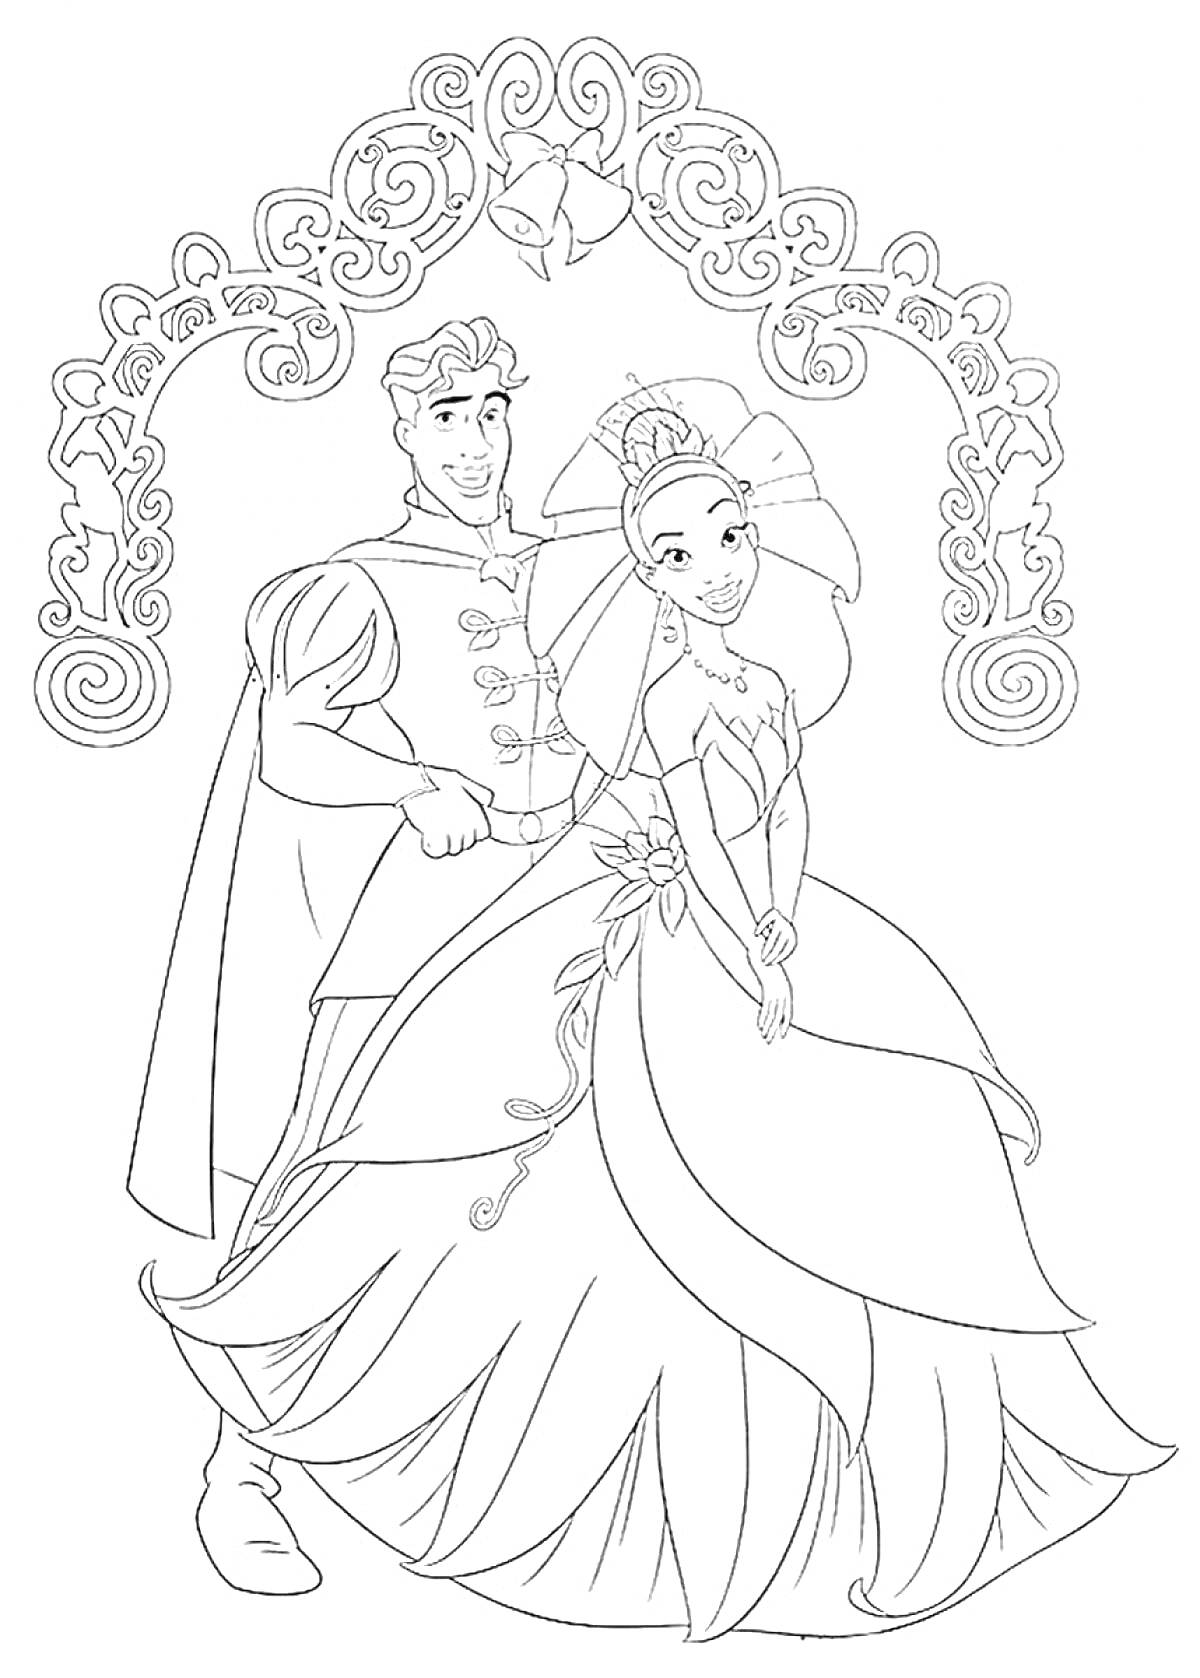 Раскраска Принц и принцесса под аркой с узорами и лягушкой